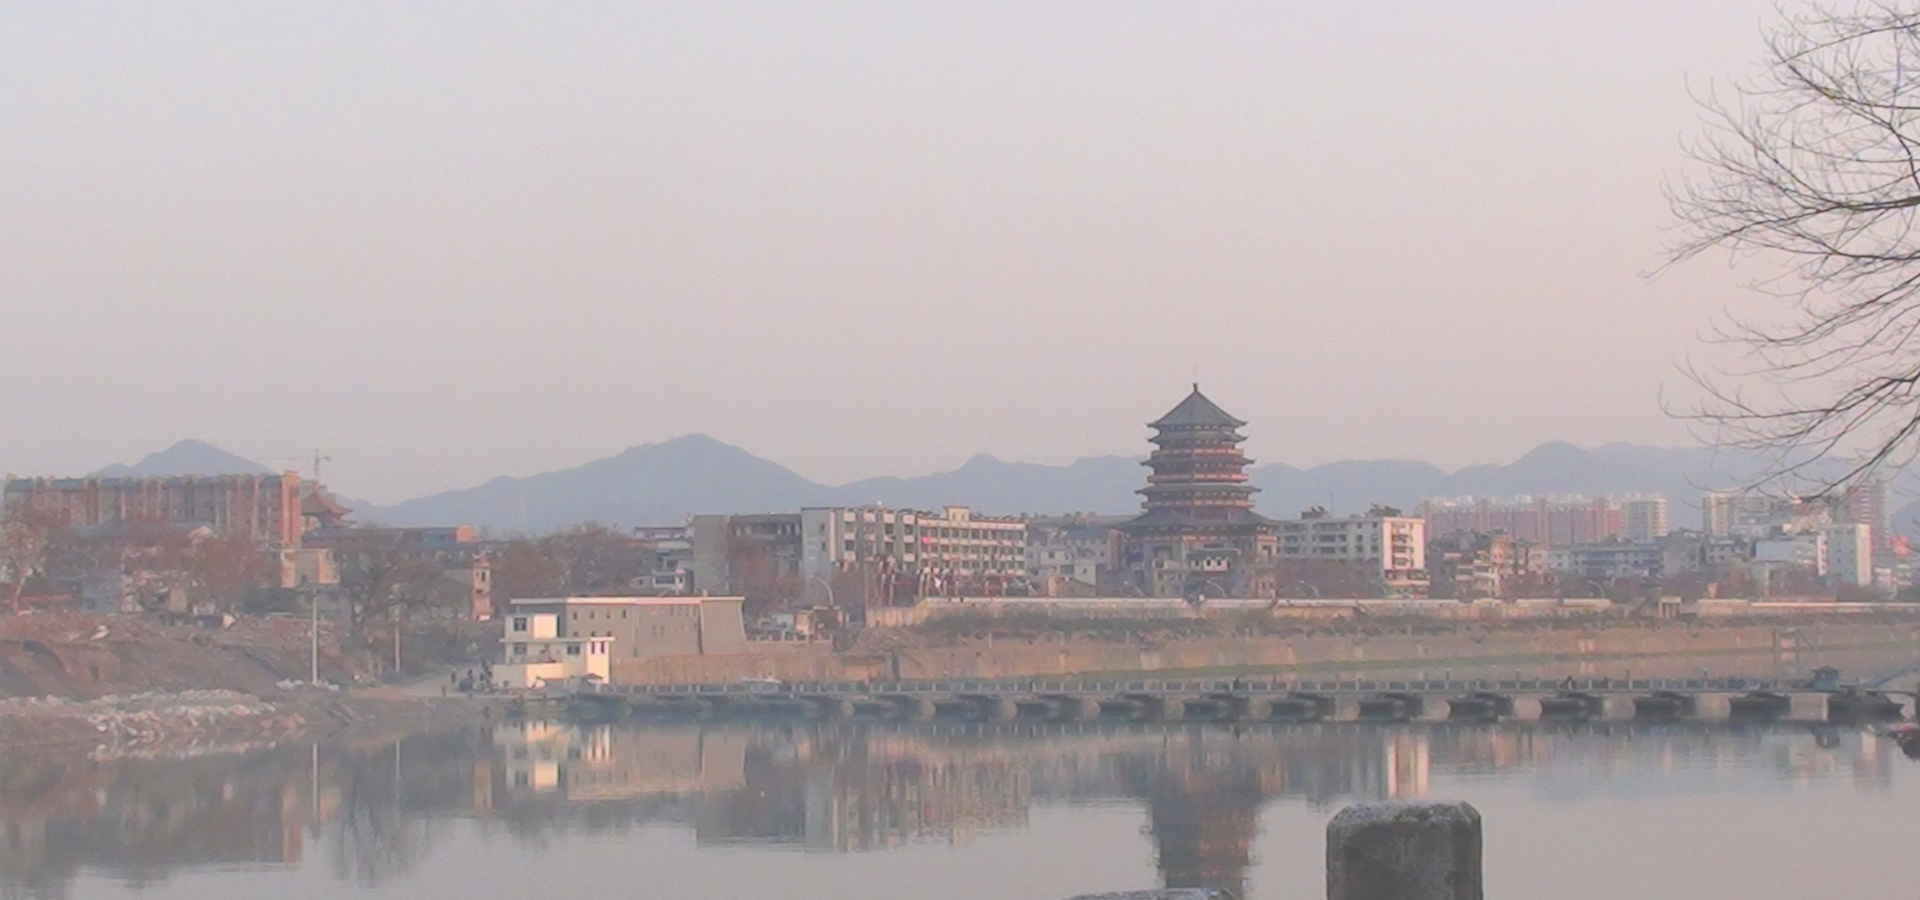 <b>Jingdezhen, Jiangxi Province, China</b>